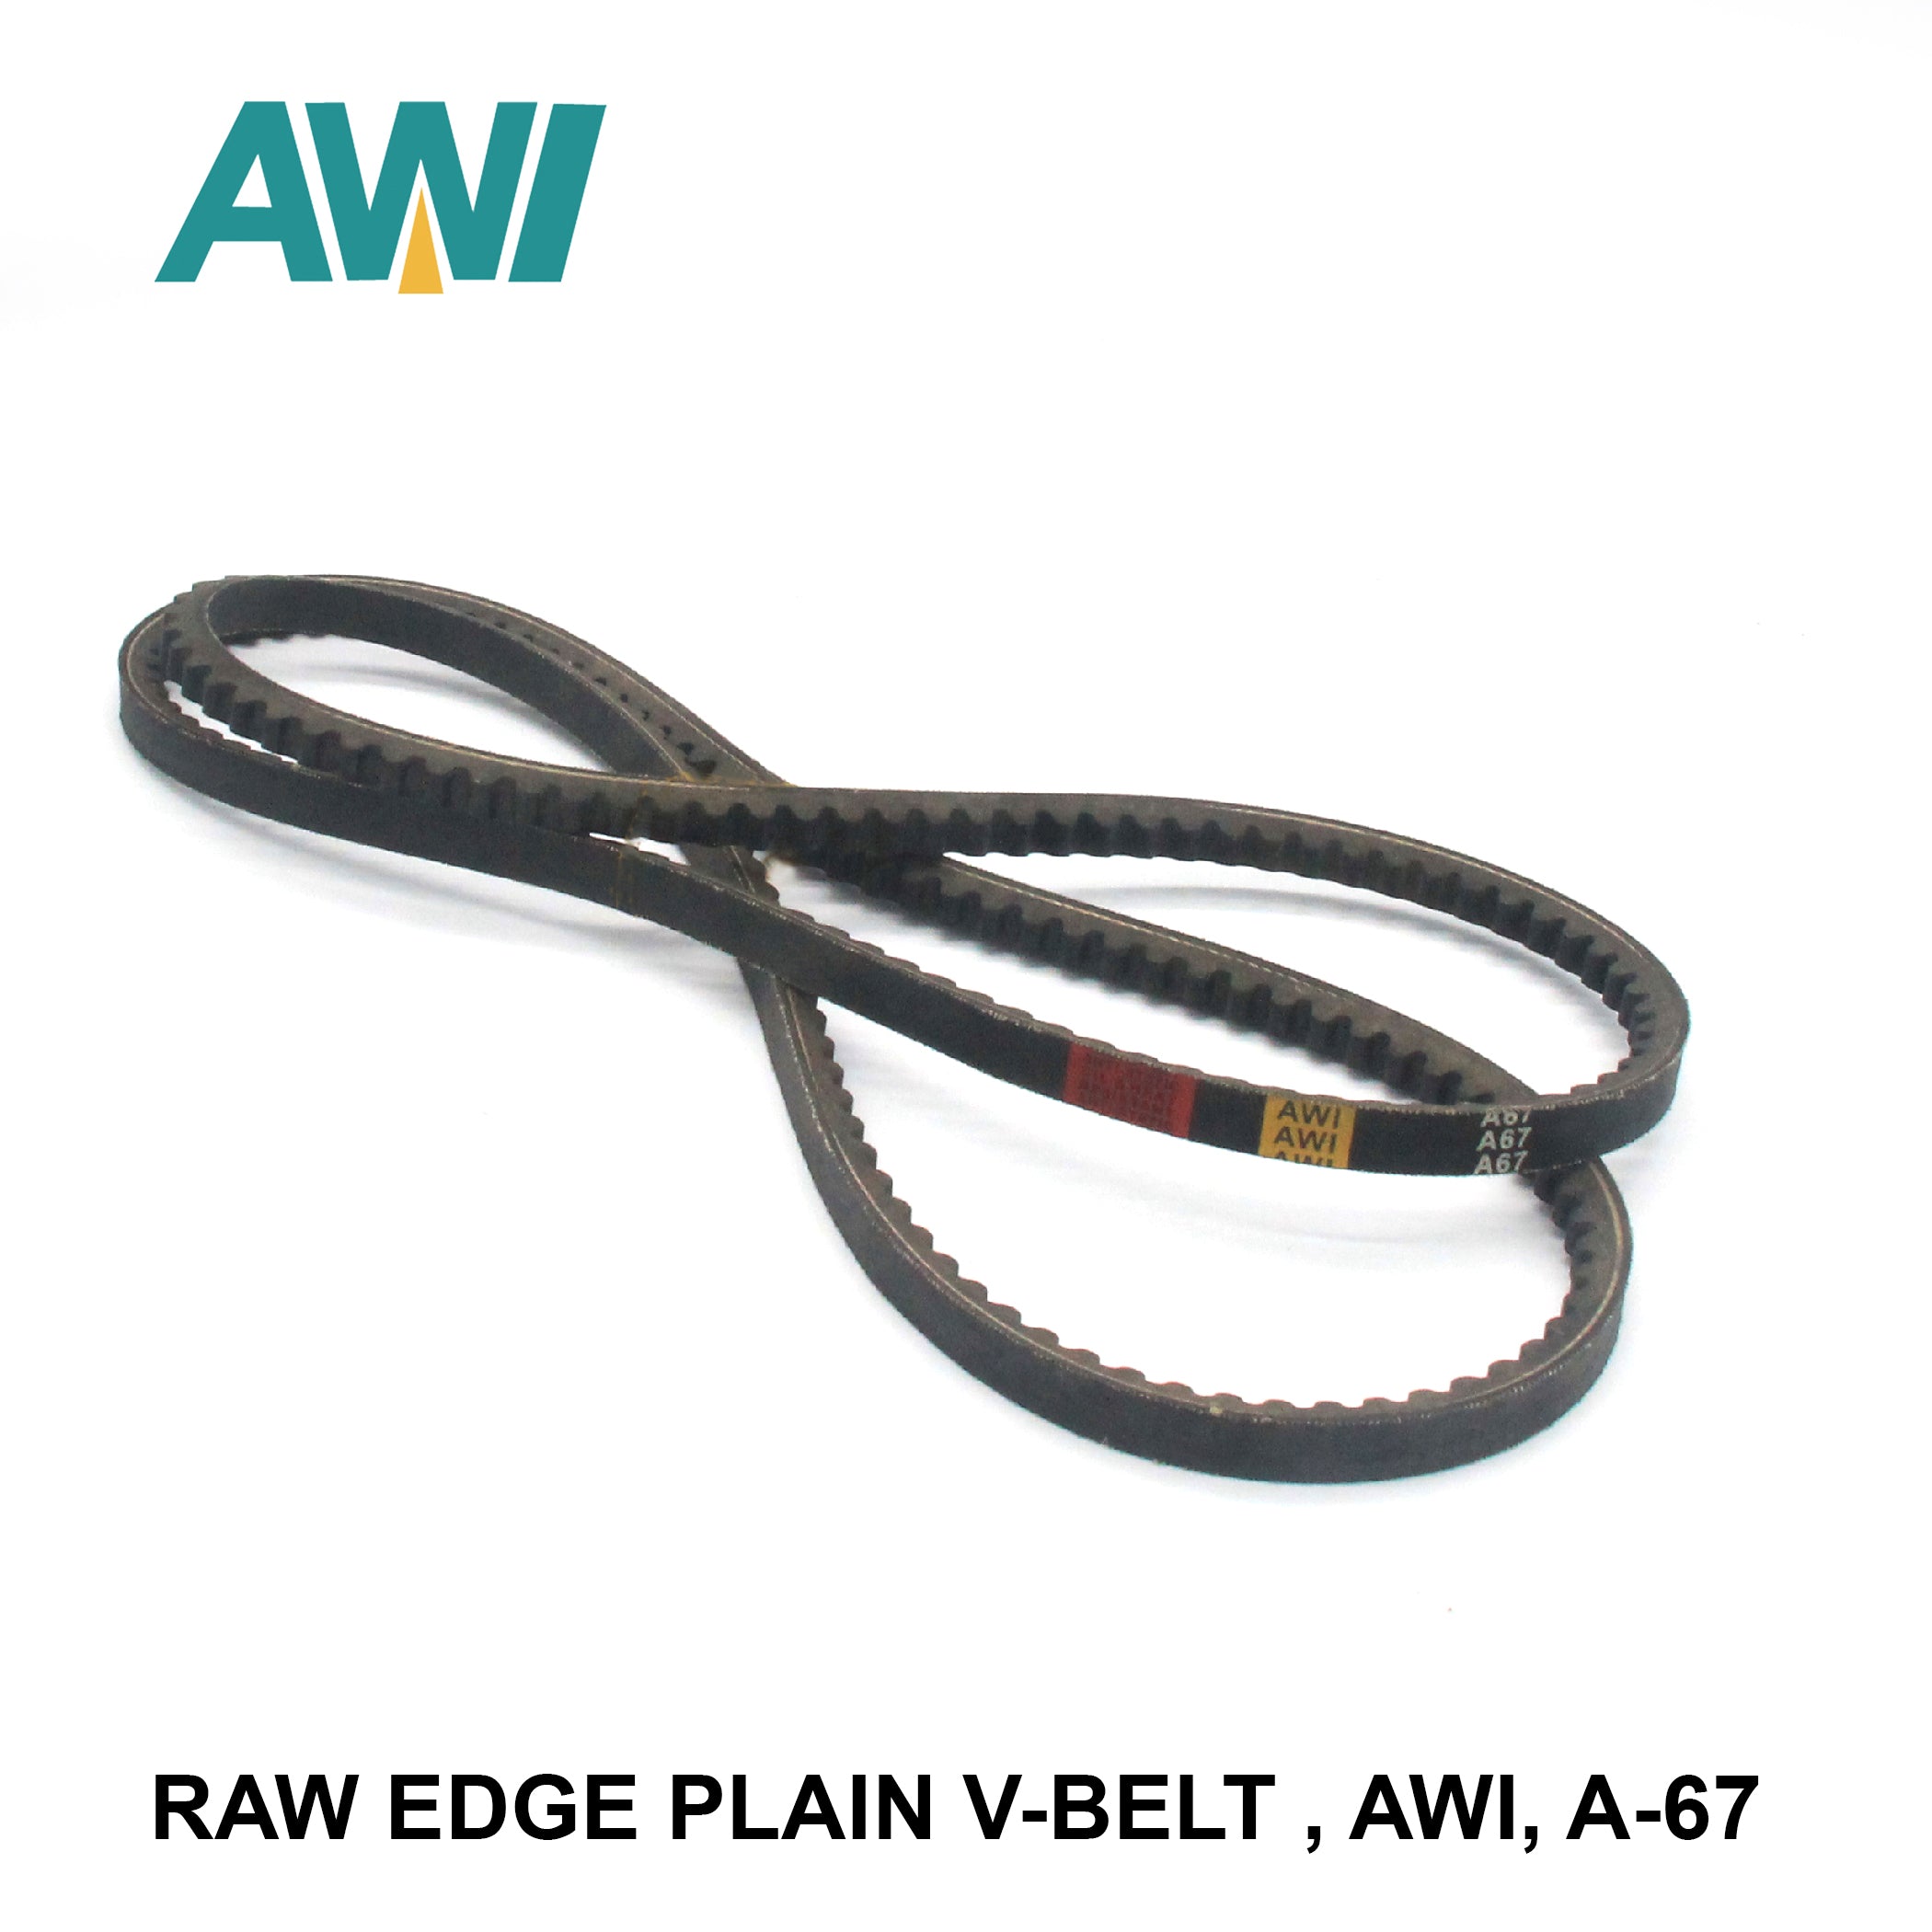 Raw Edge Plain V-belt (REMF), AWI, A-67